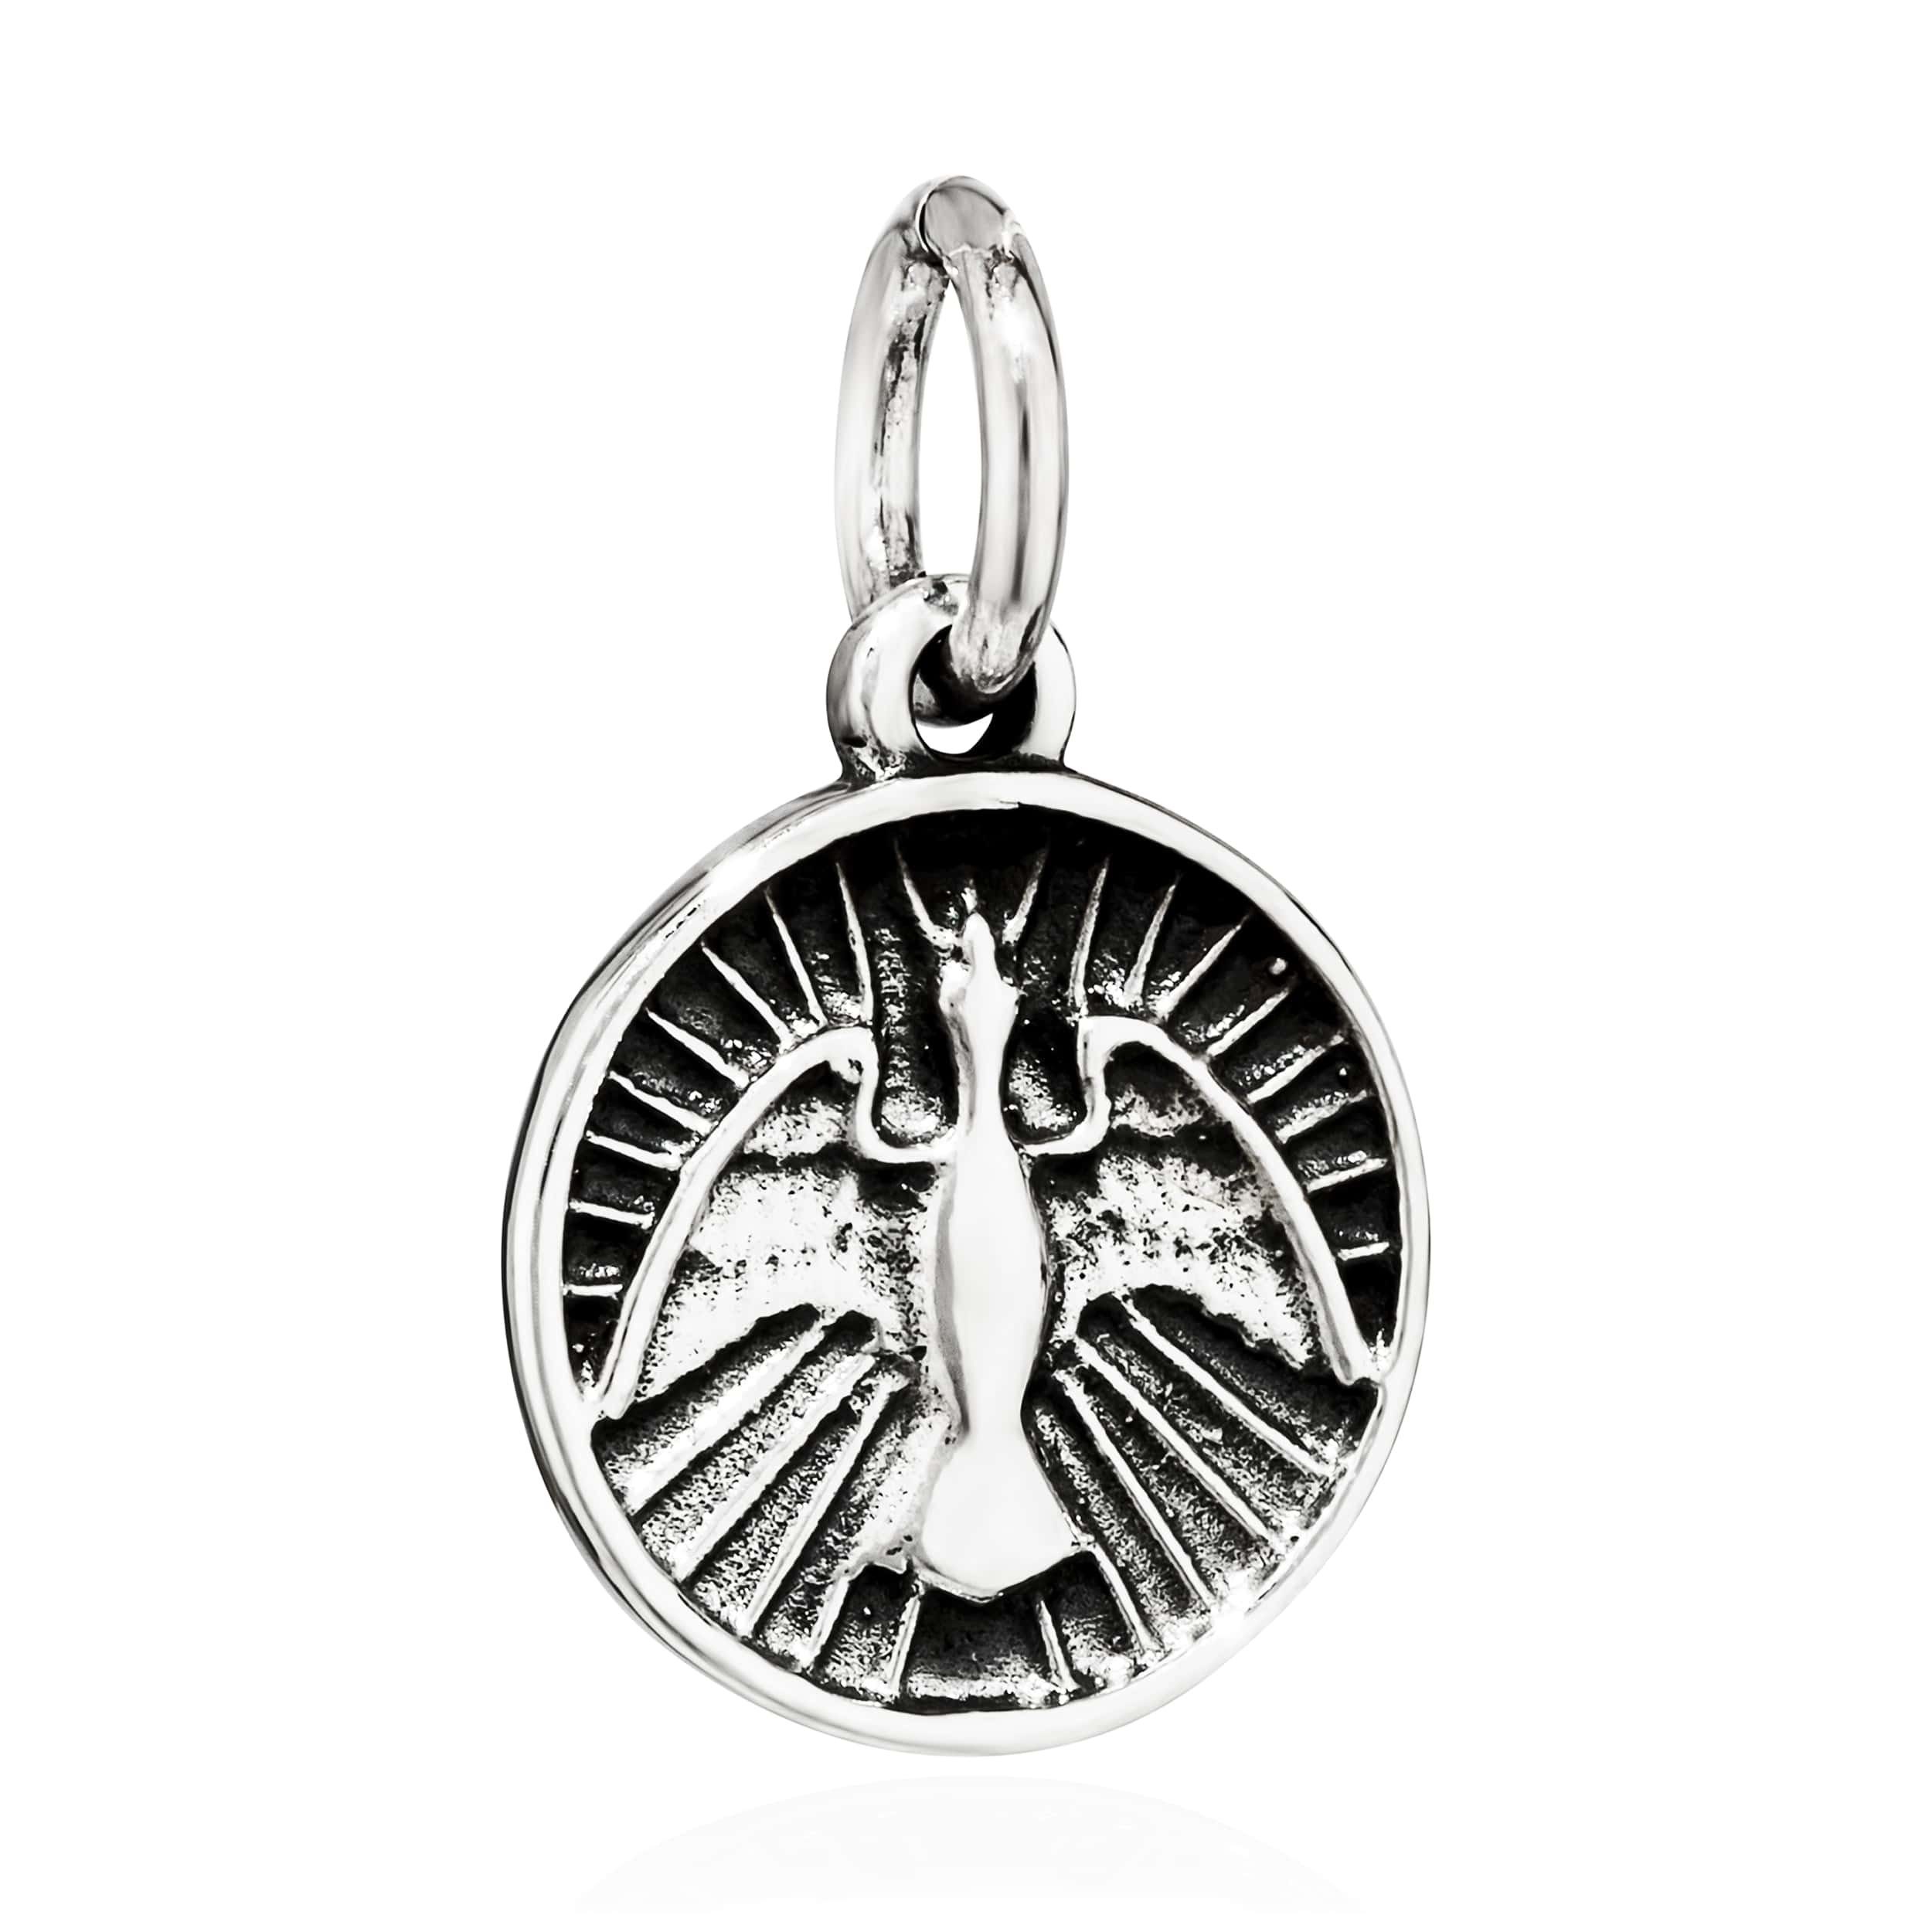 NKlaus Kettenanhänger der Silber Kettenanhänger Paloma Friedenstaube Symbol und Hoffnung 925